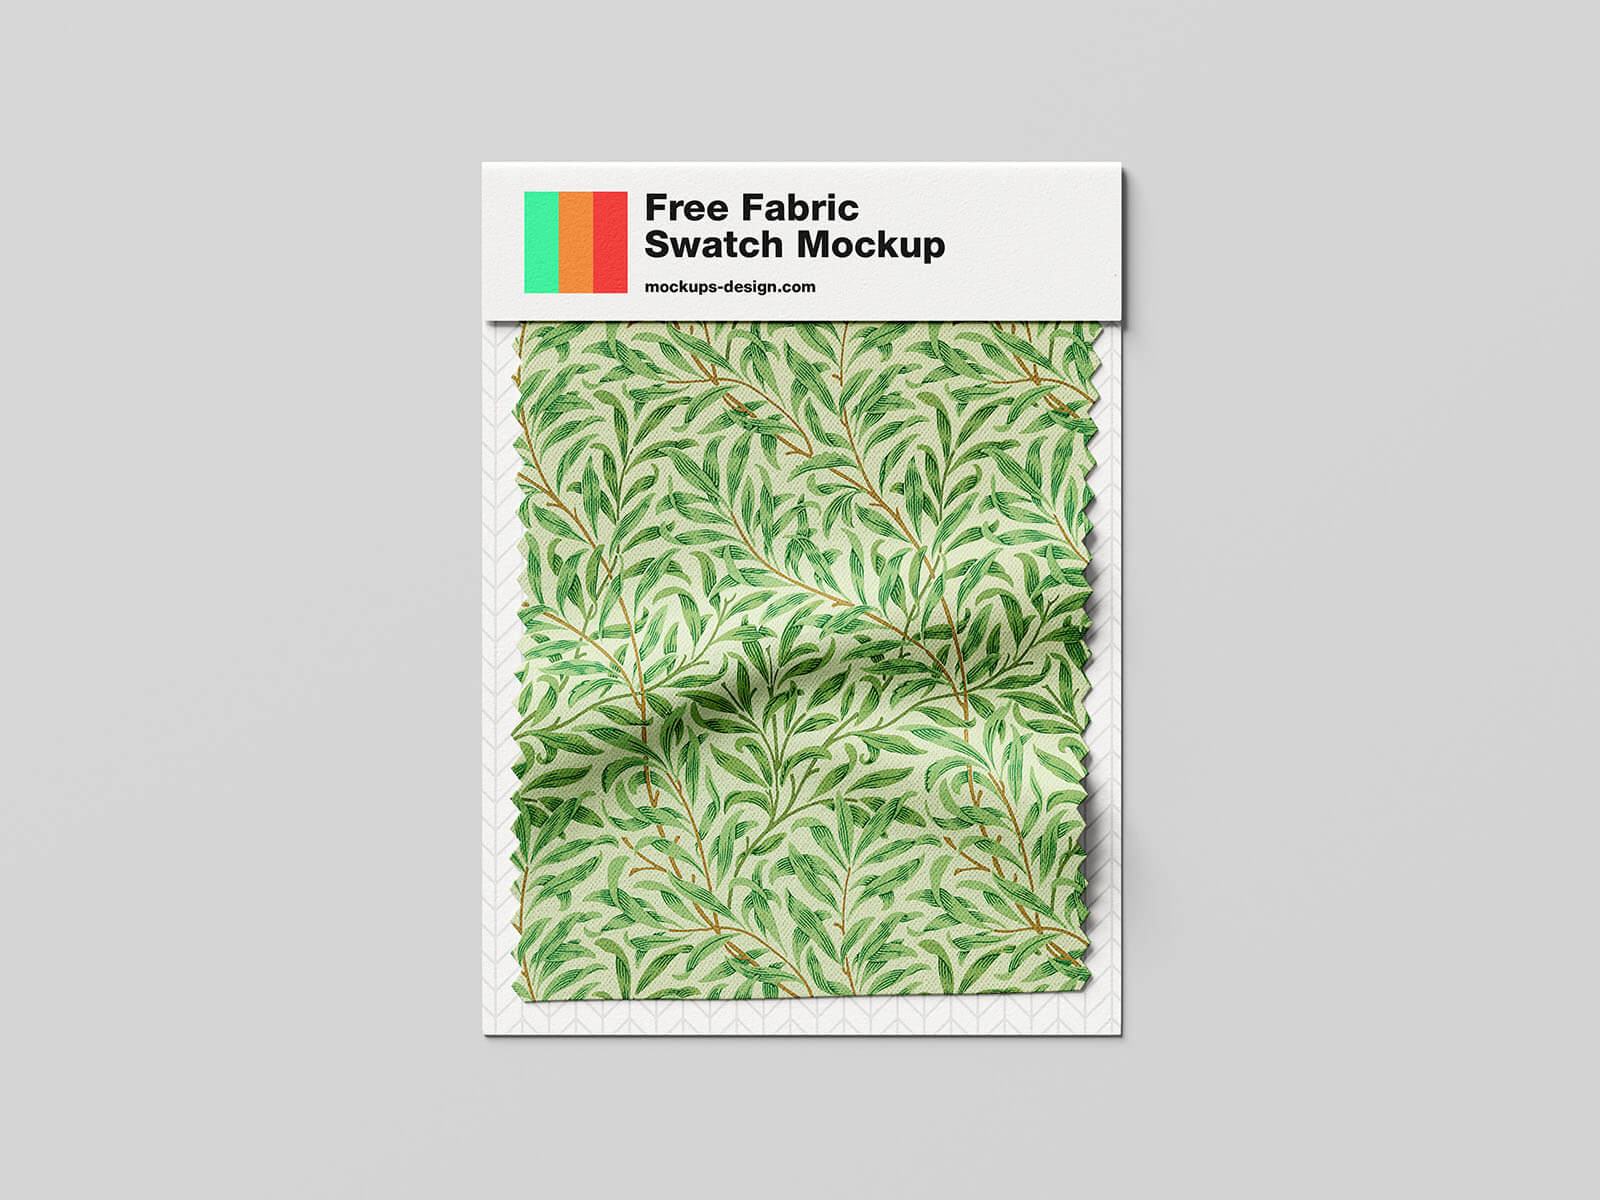 5 Free Premium Fabric Swatch Mockup PSD Files